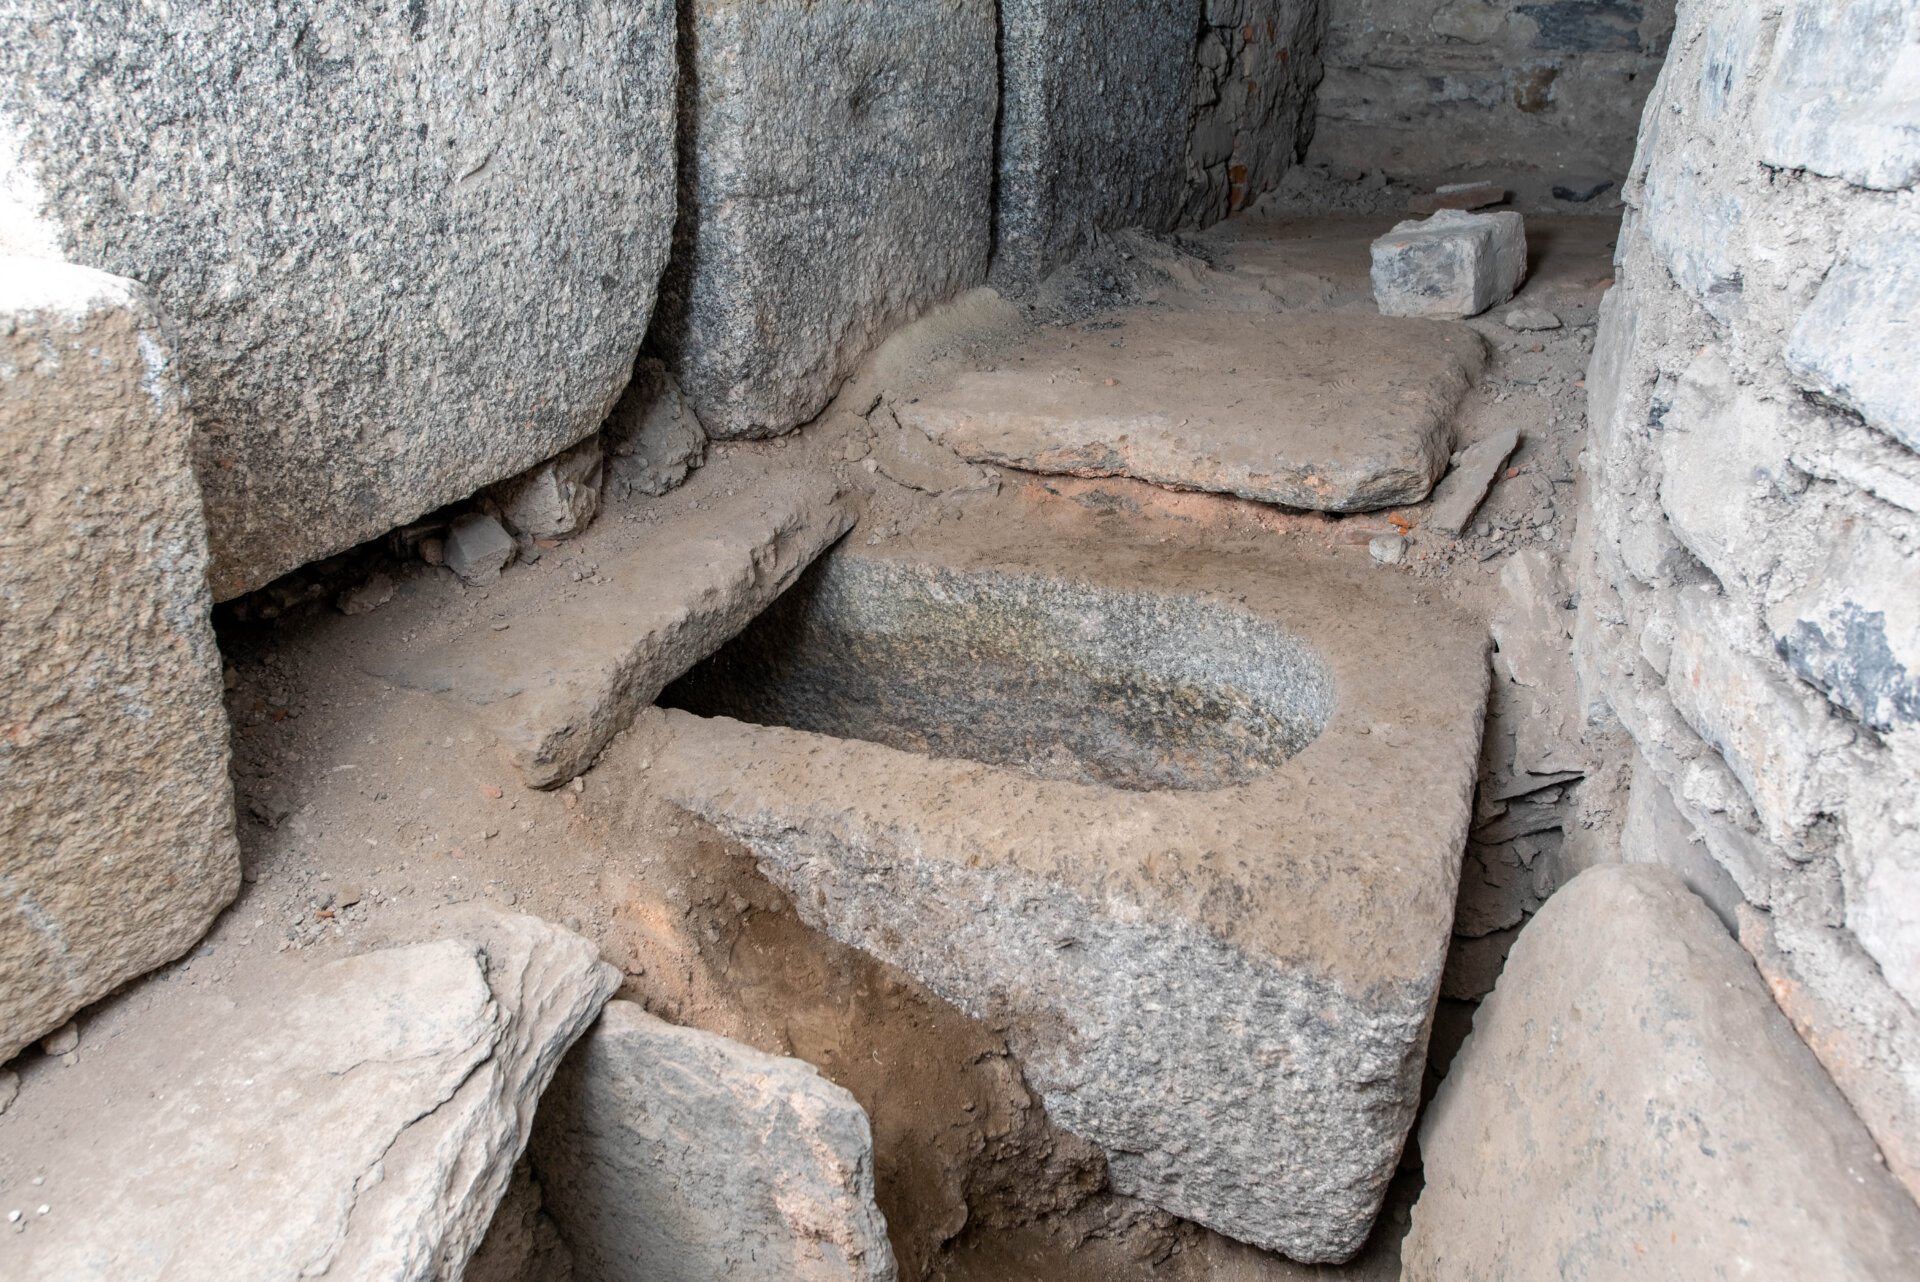 Insubria Sant'Abbondio cripta sarcofago dettaglio